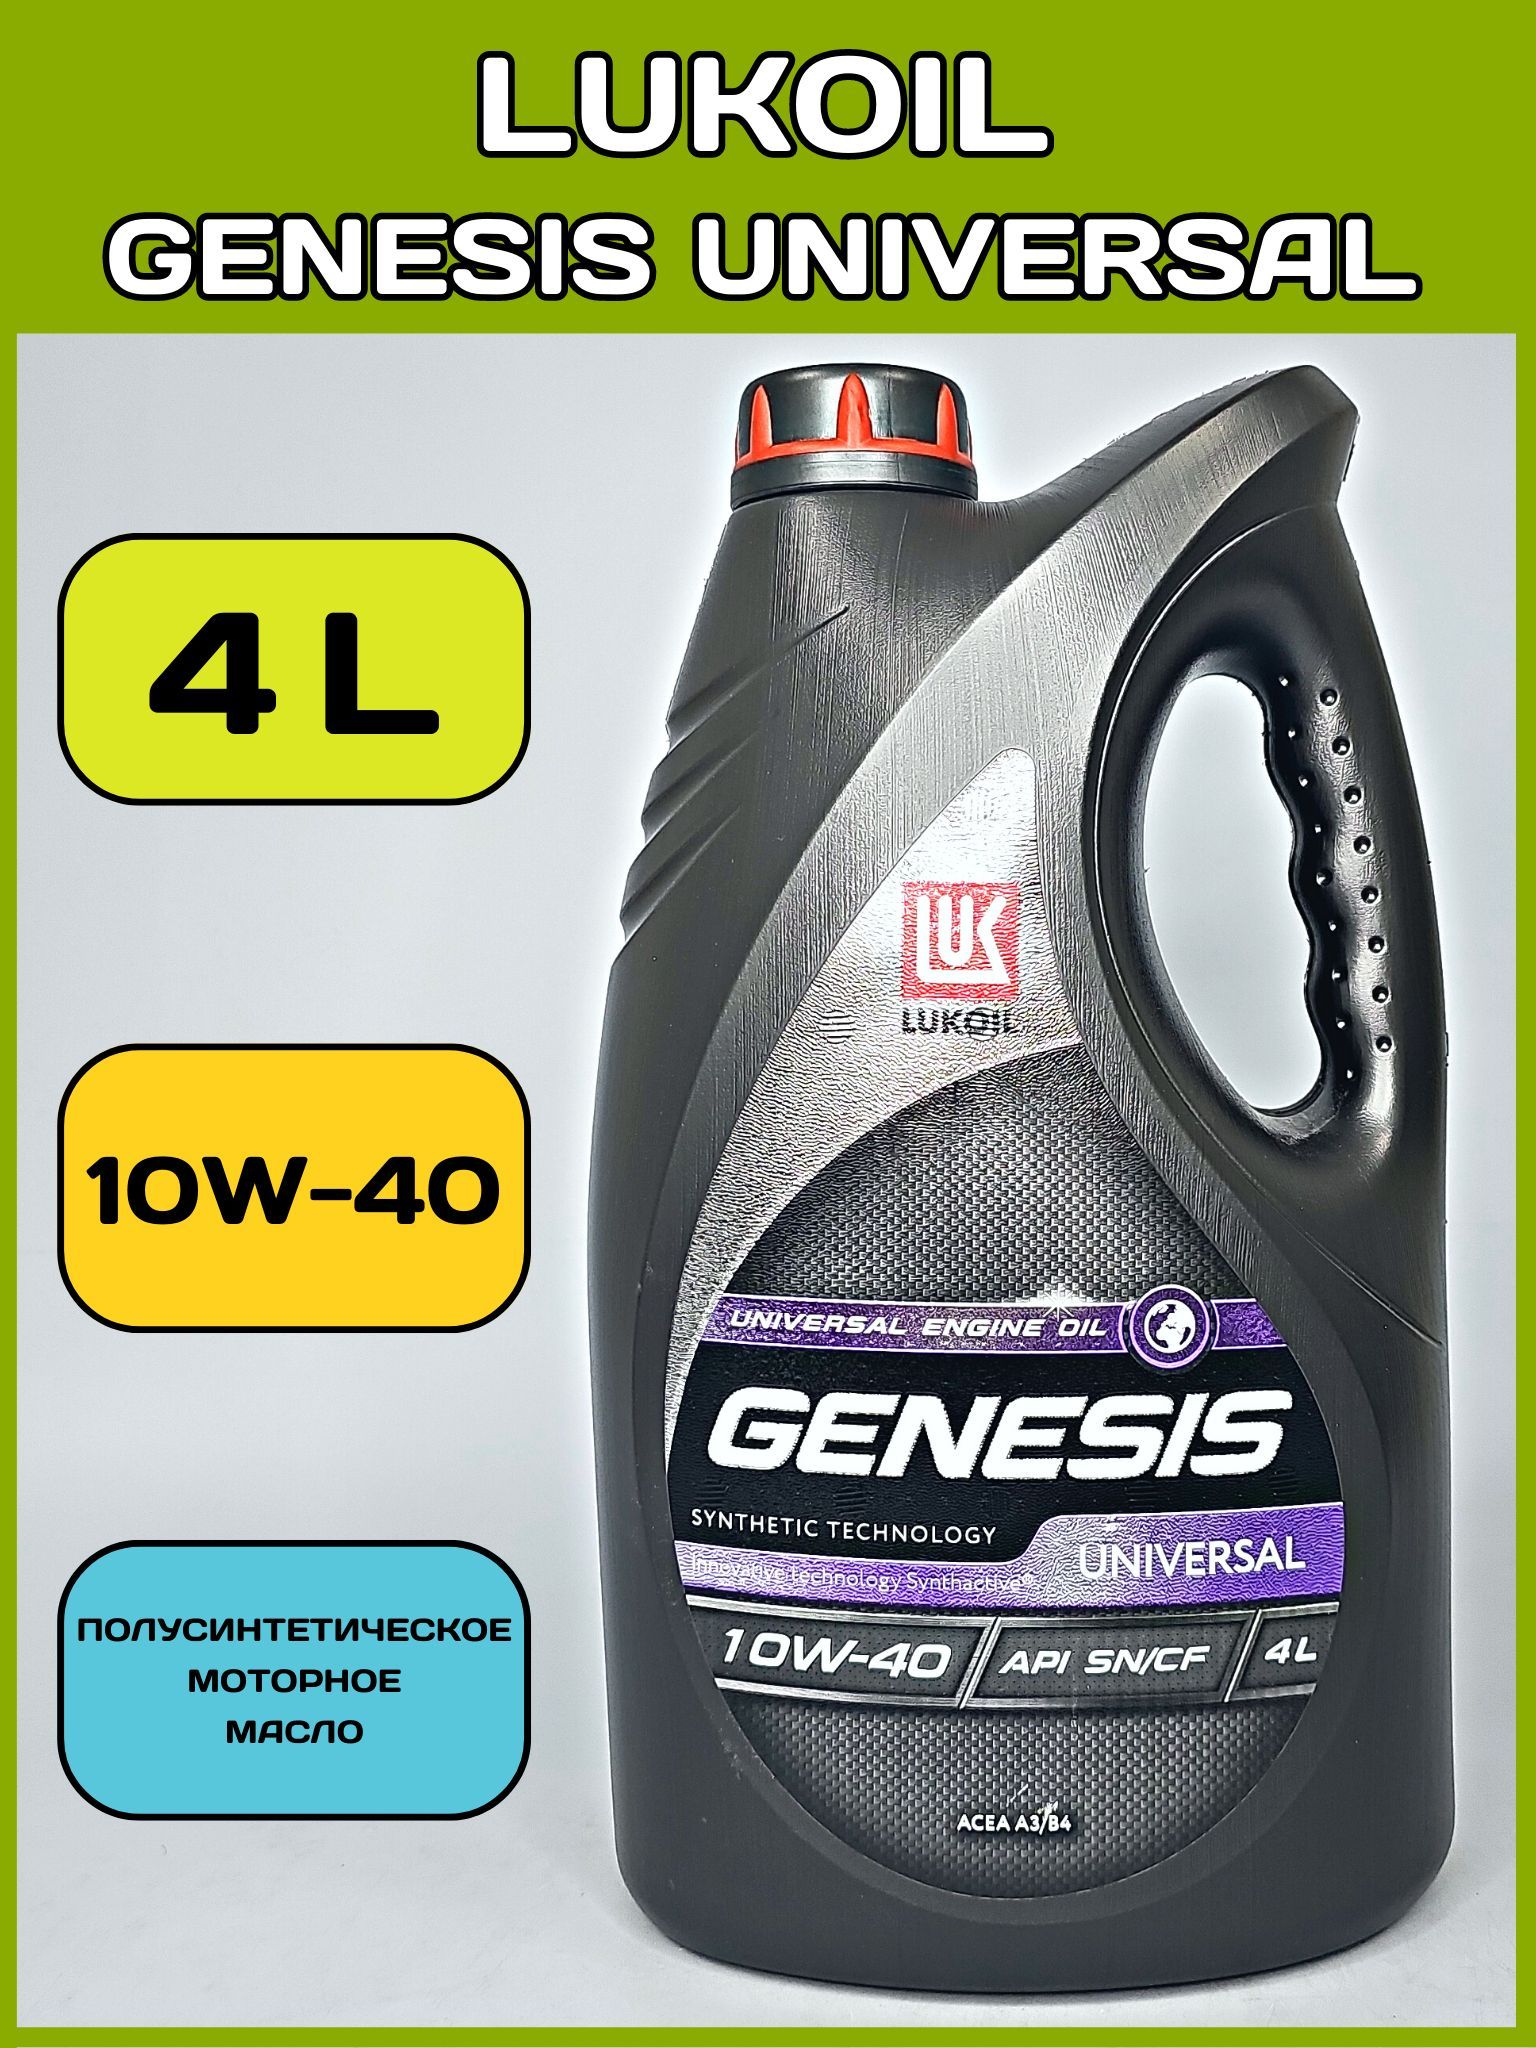 Genesis universal 10w 40. Lukoil Genesis Universal 10w-40. Лукойл Genesis Universal 5w40. Lukoil Genesis Universal 5w-40 4л. Lukoil Genesis Universal 10w-40 артикул.